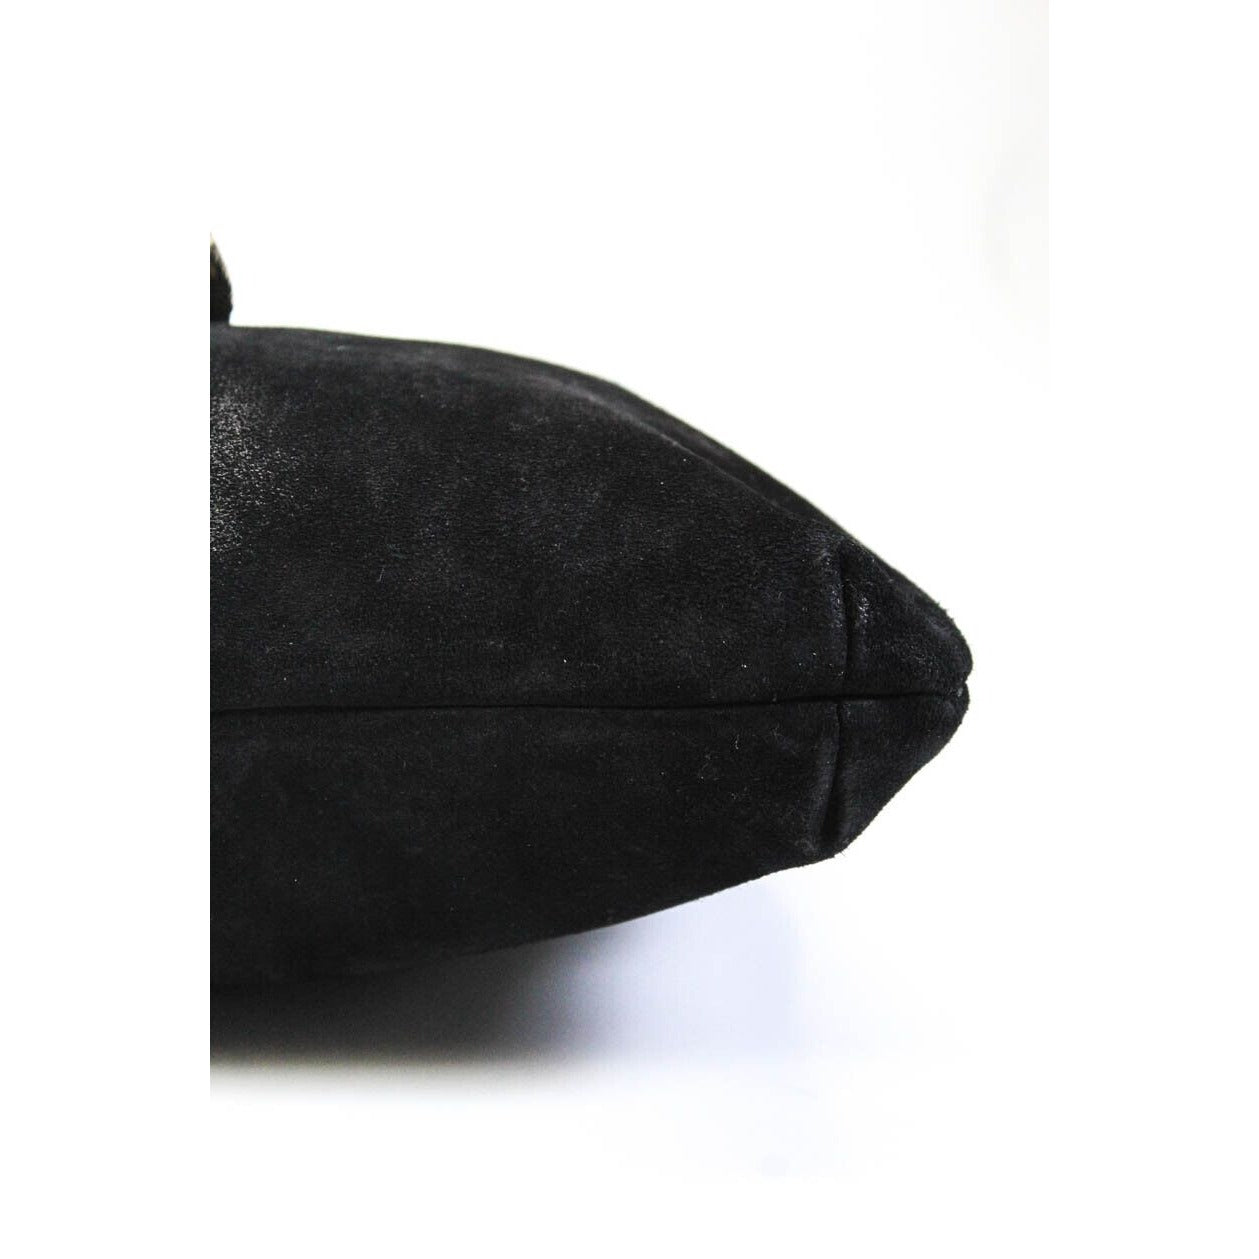 Gucci Black Leather Jackie Tigrette/Dionysus Hobo bag